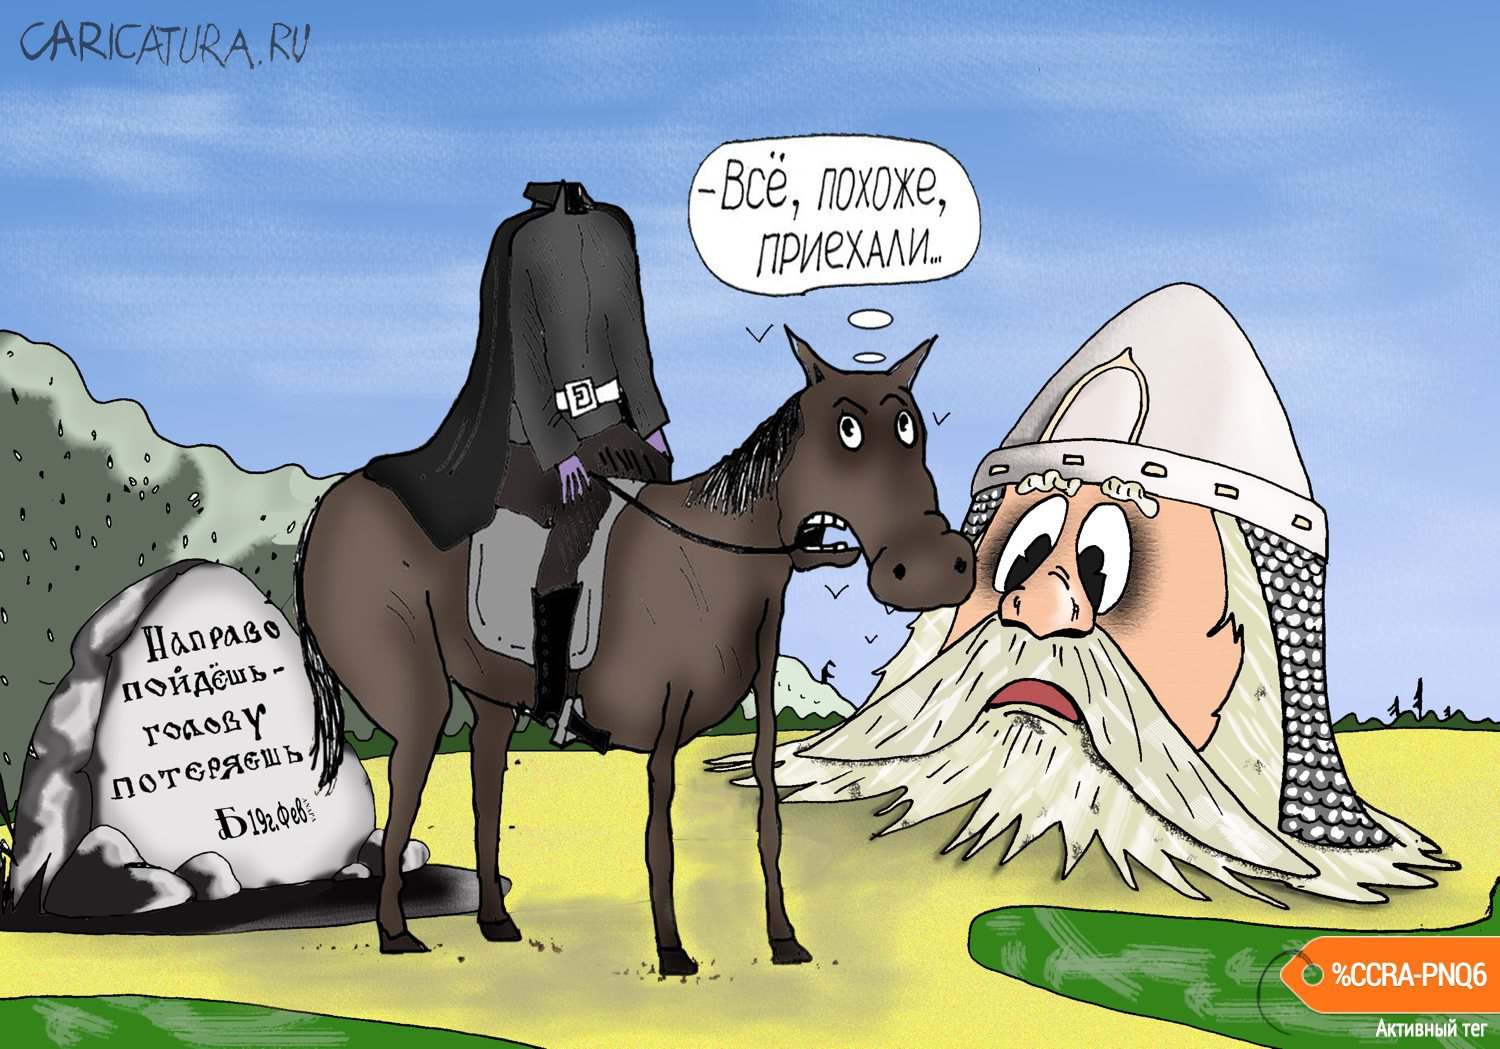 Карикатура "Про встречу", Борис Демин